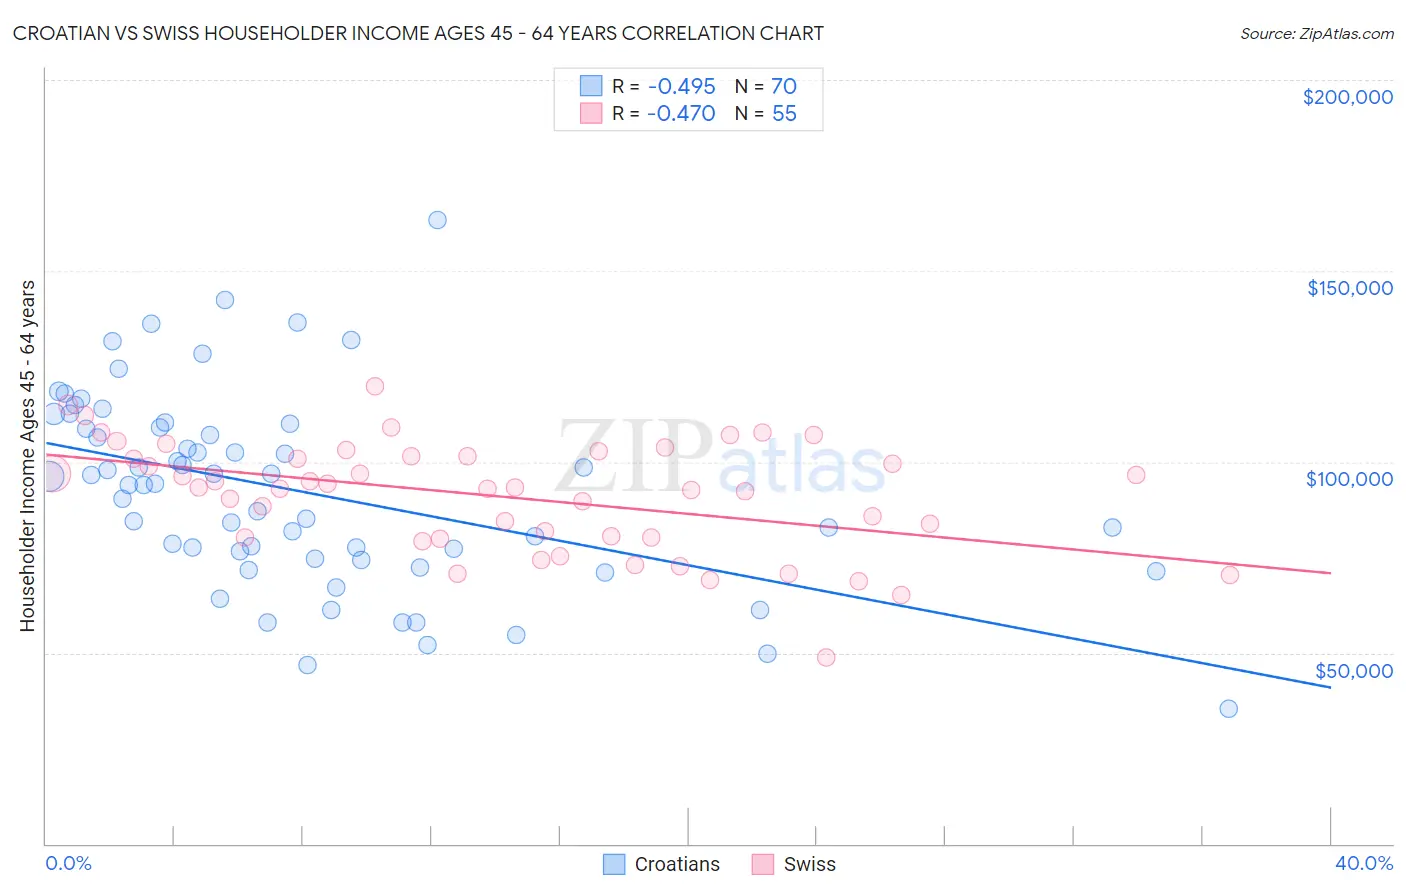 Croatian vs Swiss Householder Income Ages 45 - 64 years